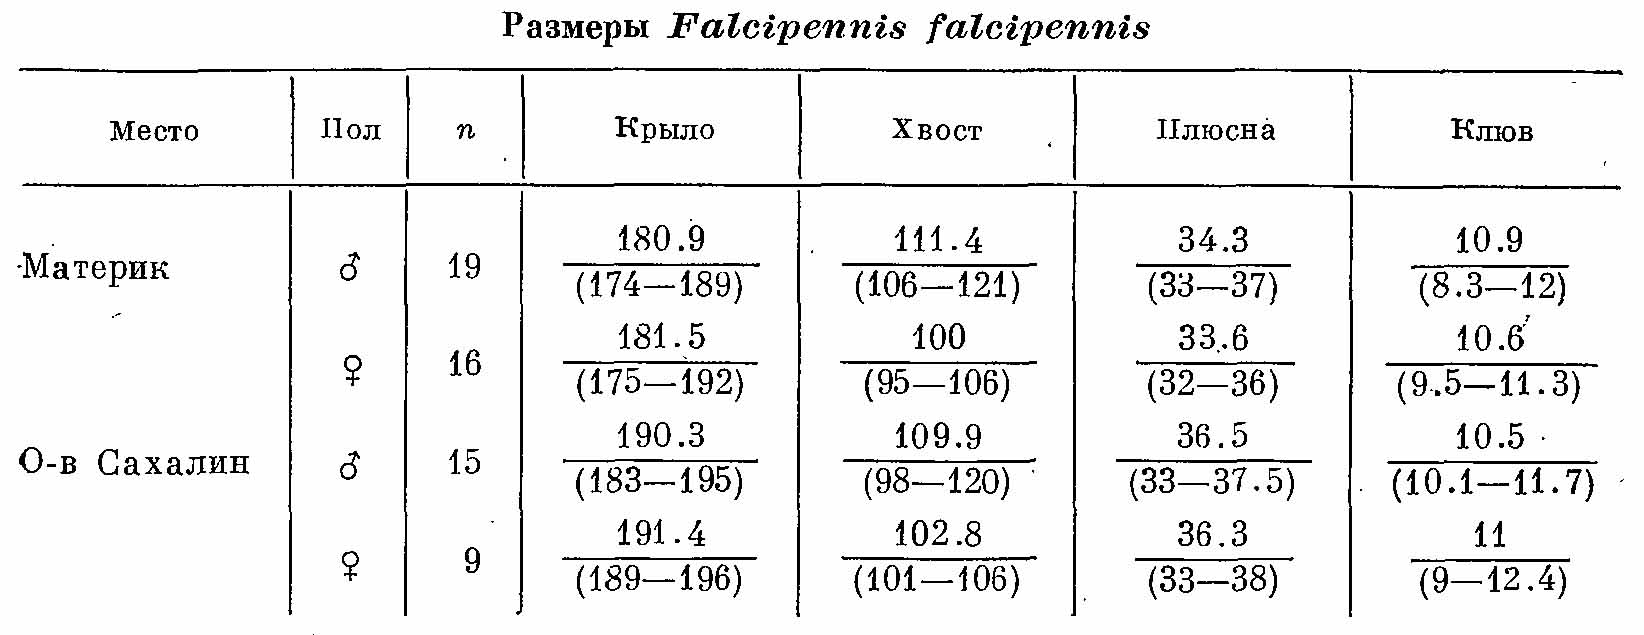 Таблица 1. Размеры Falcipennis falcipennis